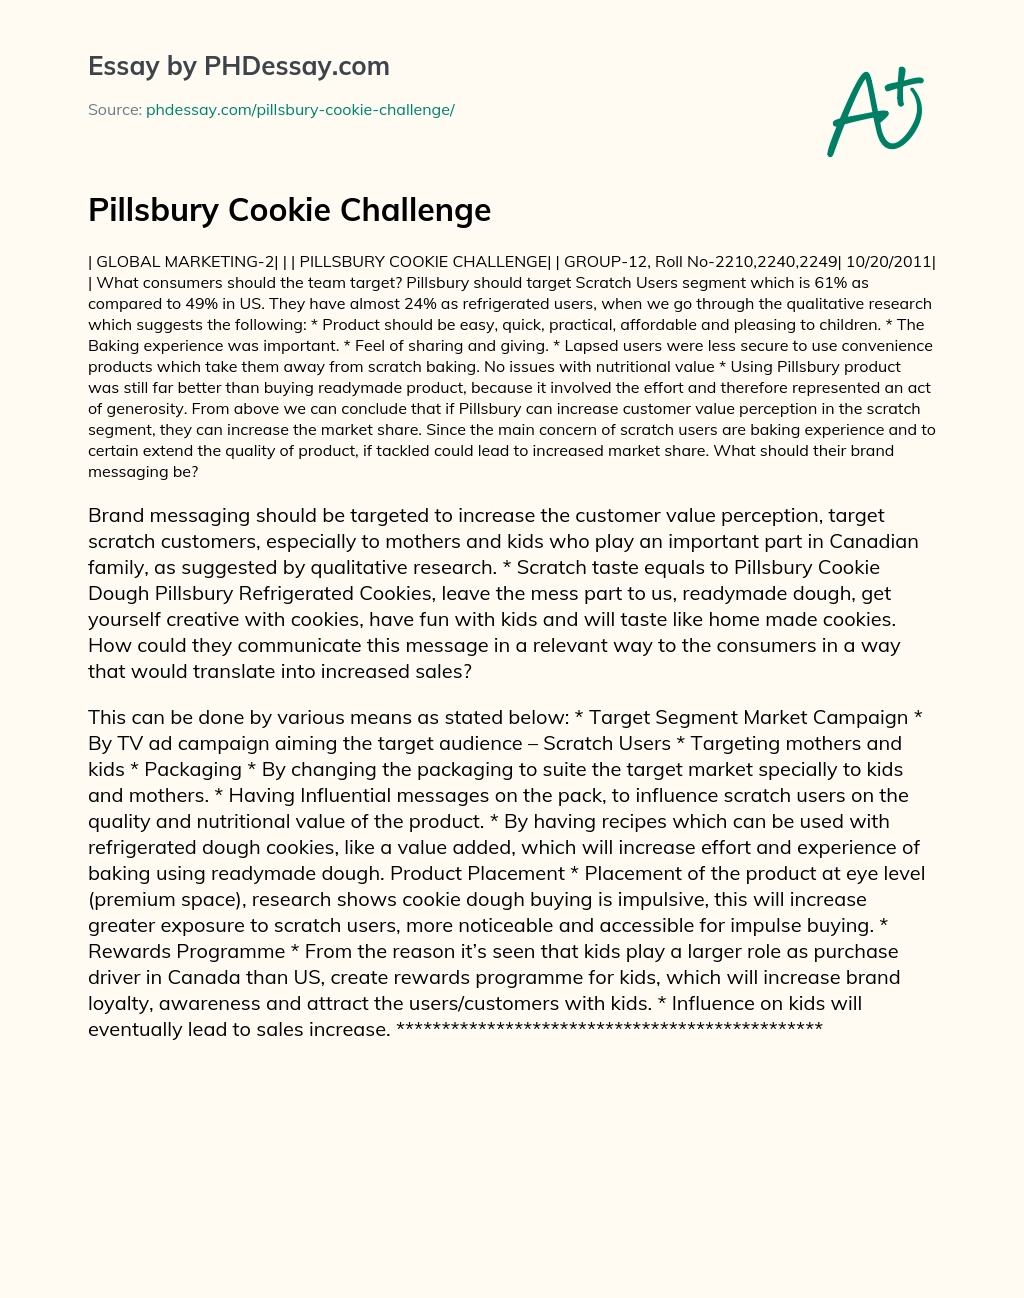 Pillsbury Cookie Challenge essay